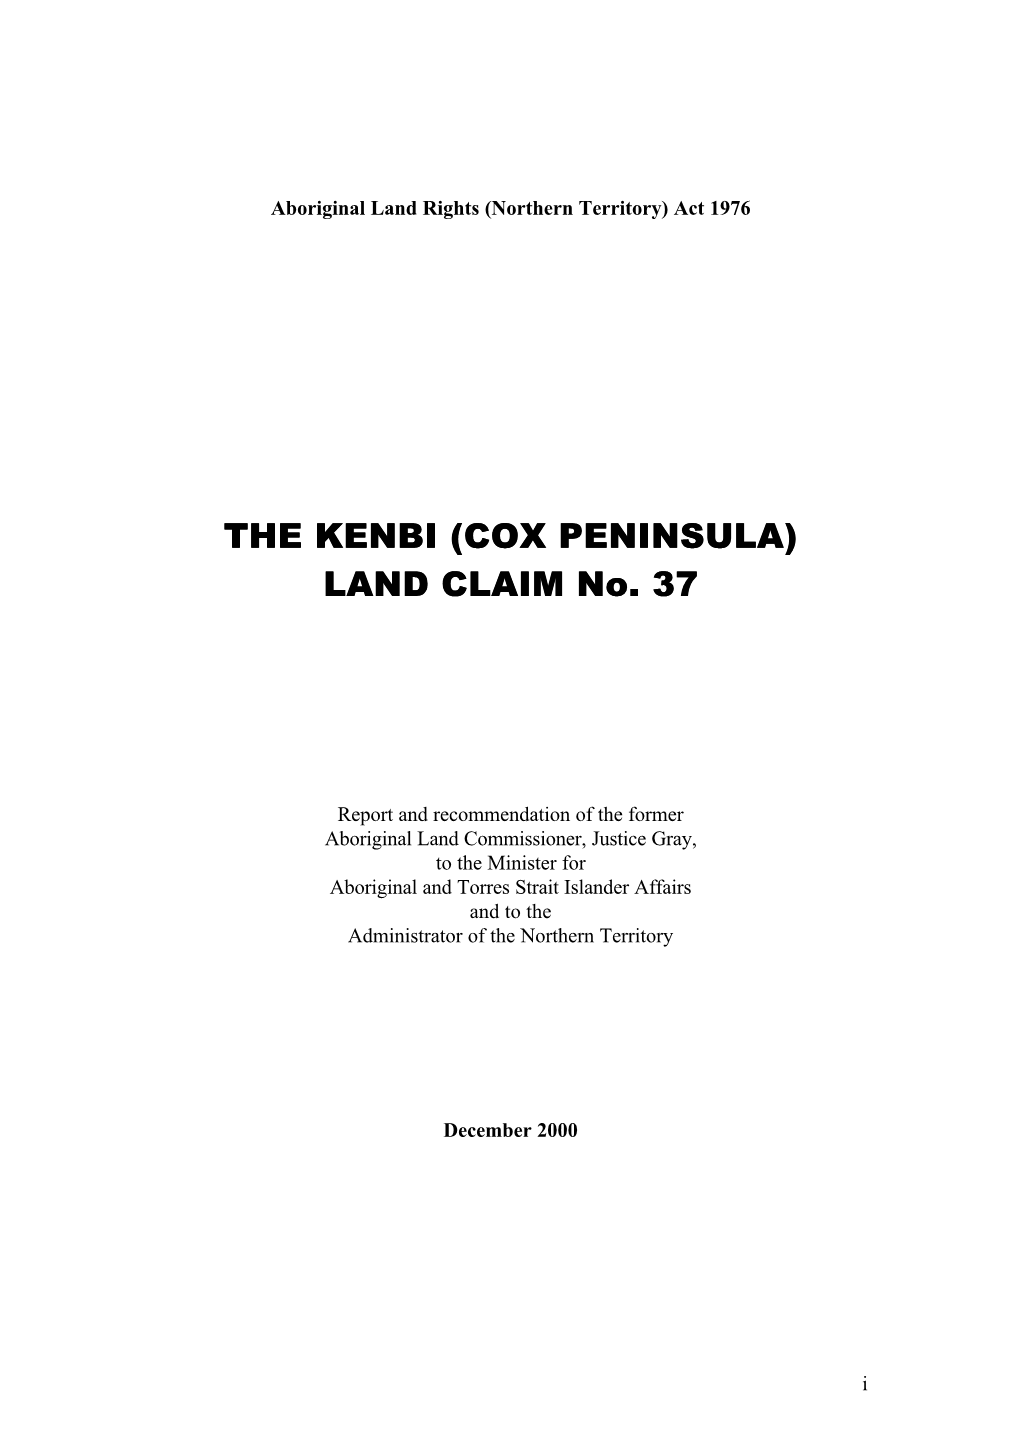 THE KENBI (COX PENINSULA) LAND CLAIM No